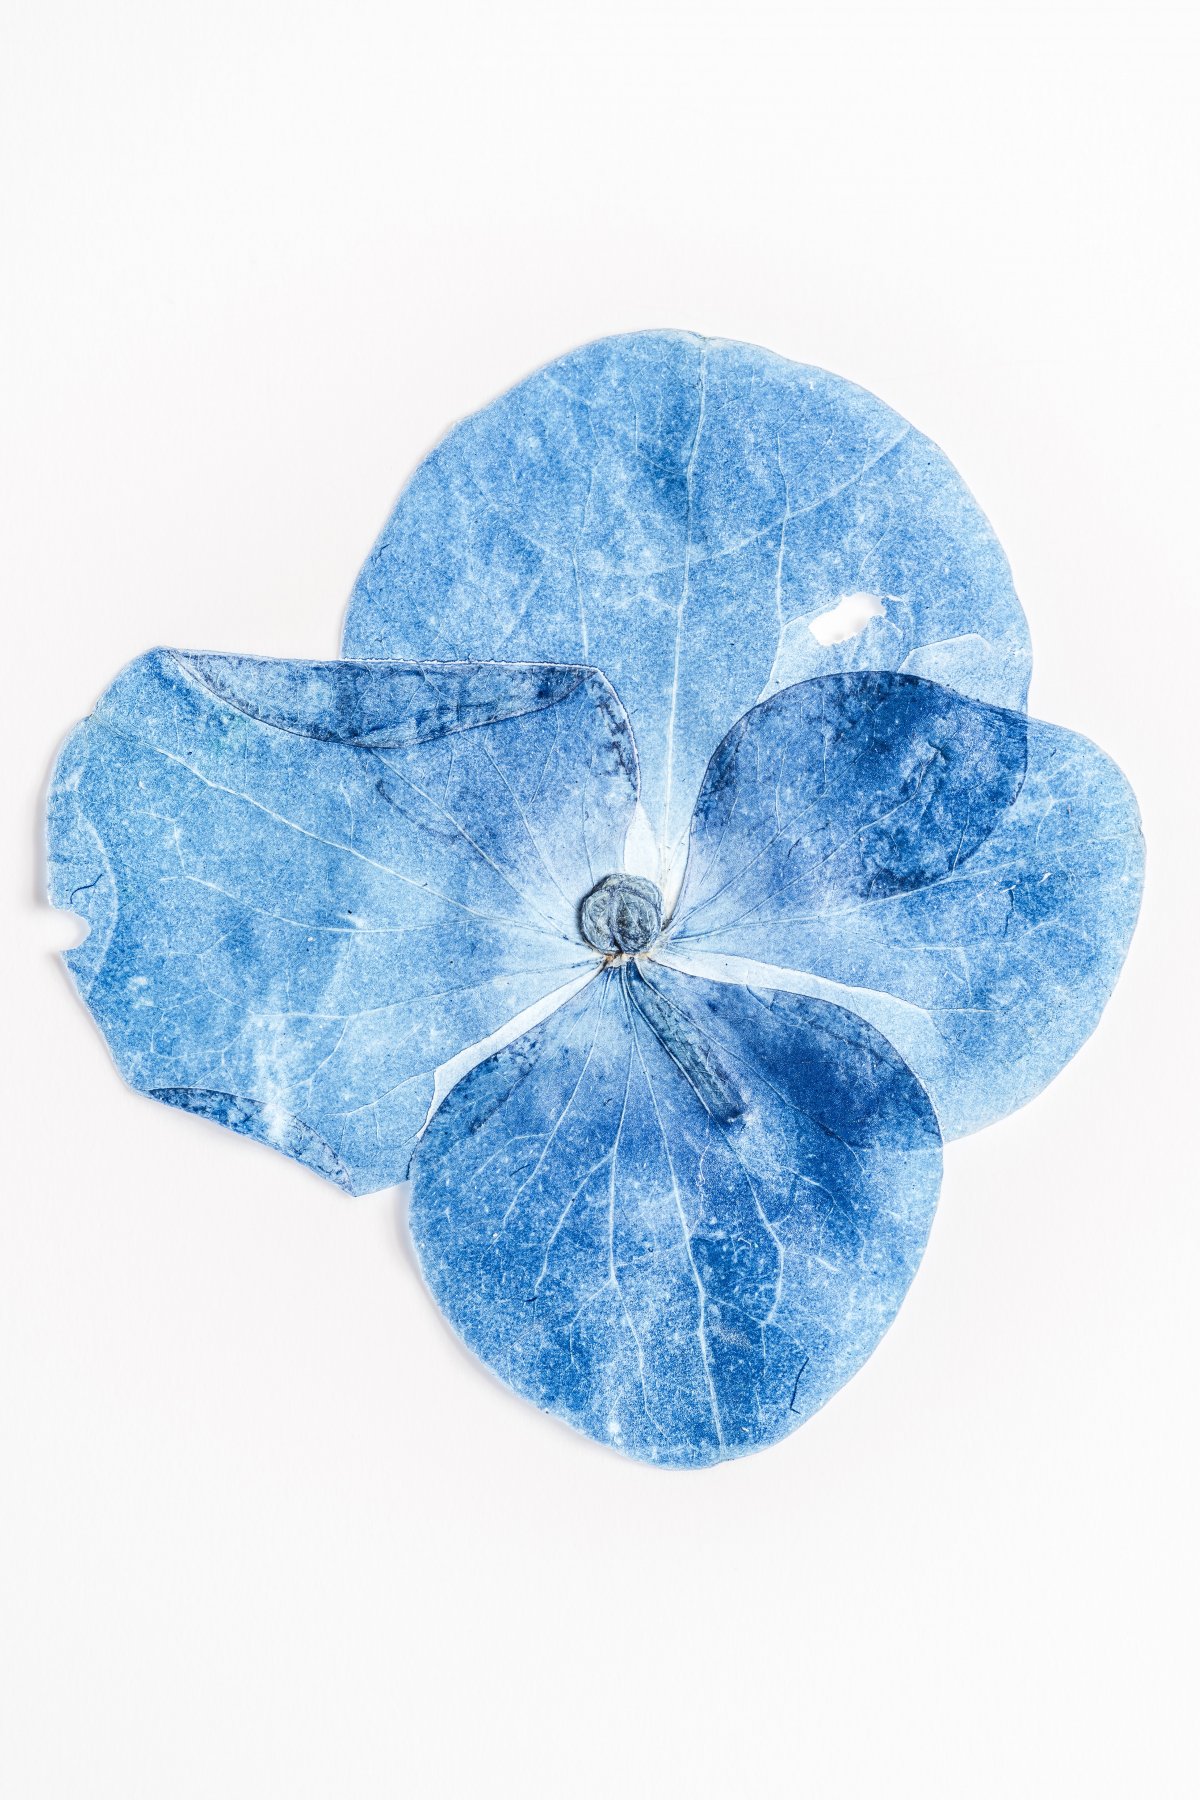 blue flower picture specimen